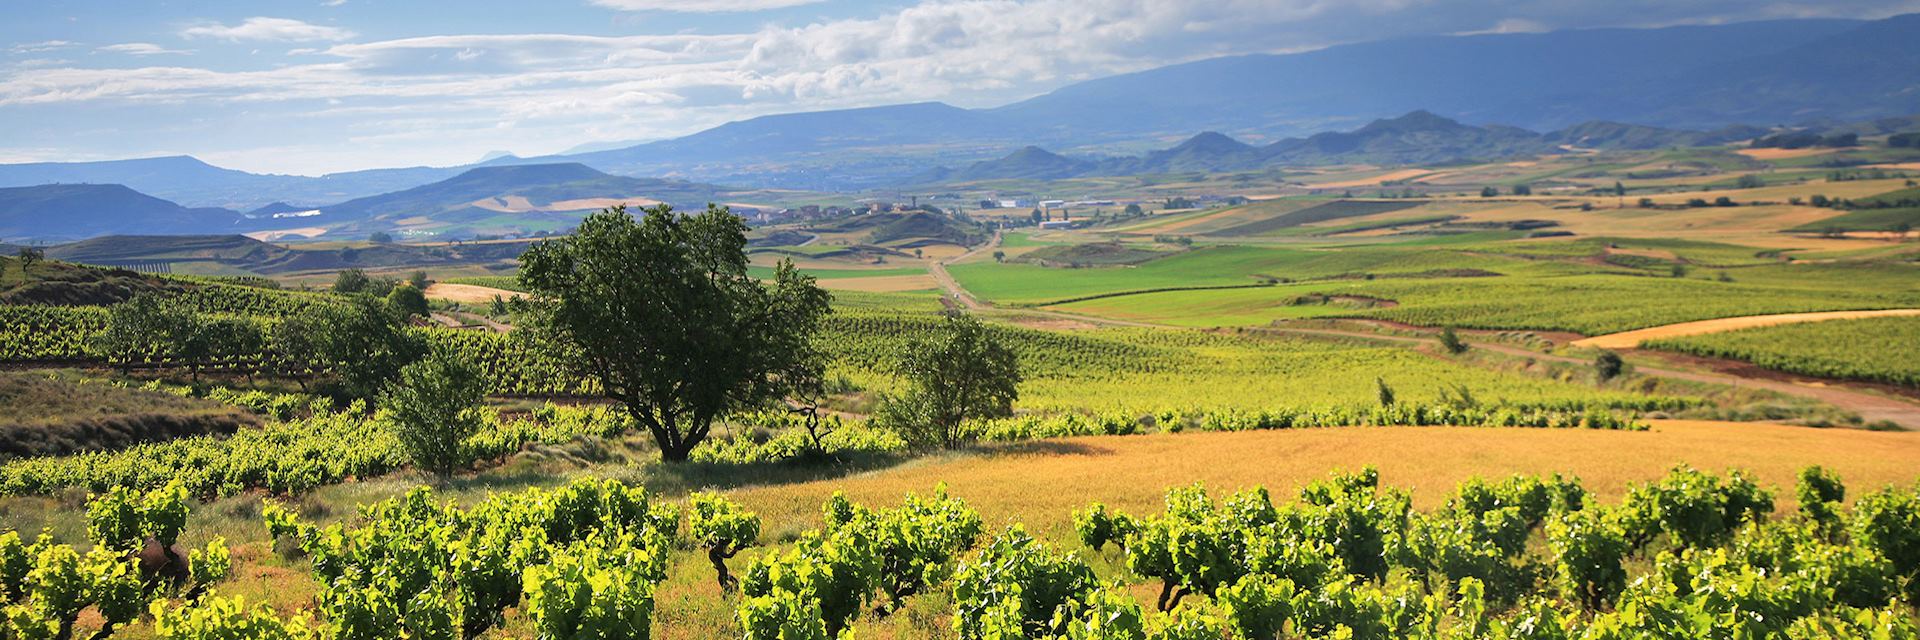 Vineyards in La Rioja wine region